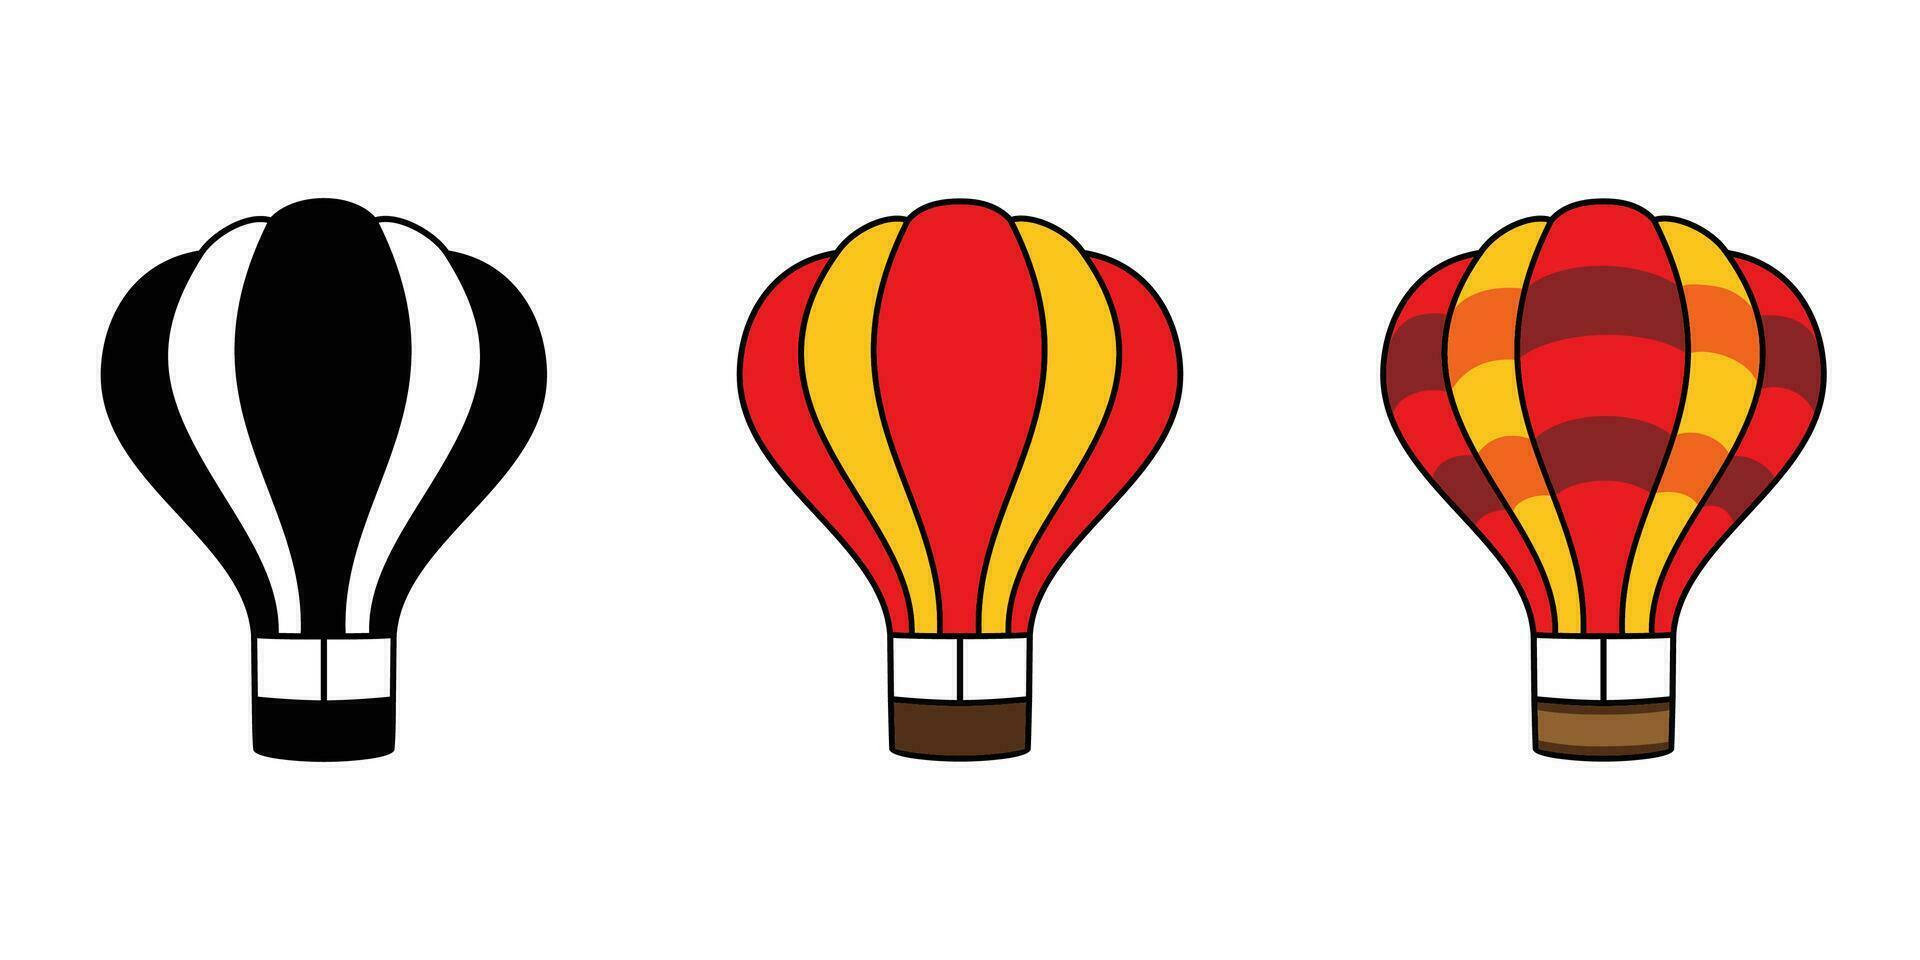 hot air balloon design. travel air transportation sign and symbol. vector